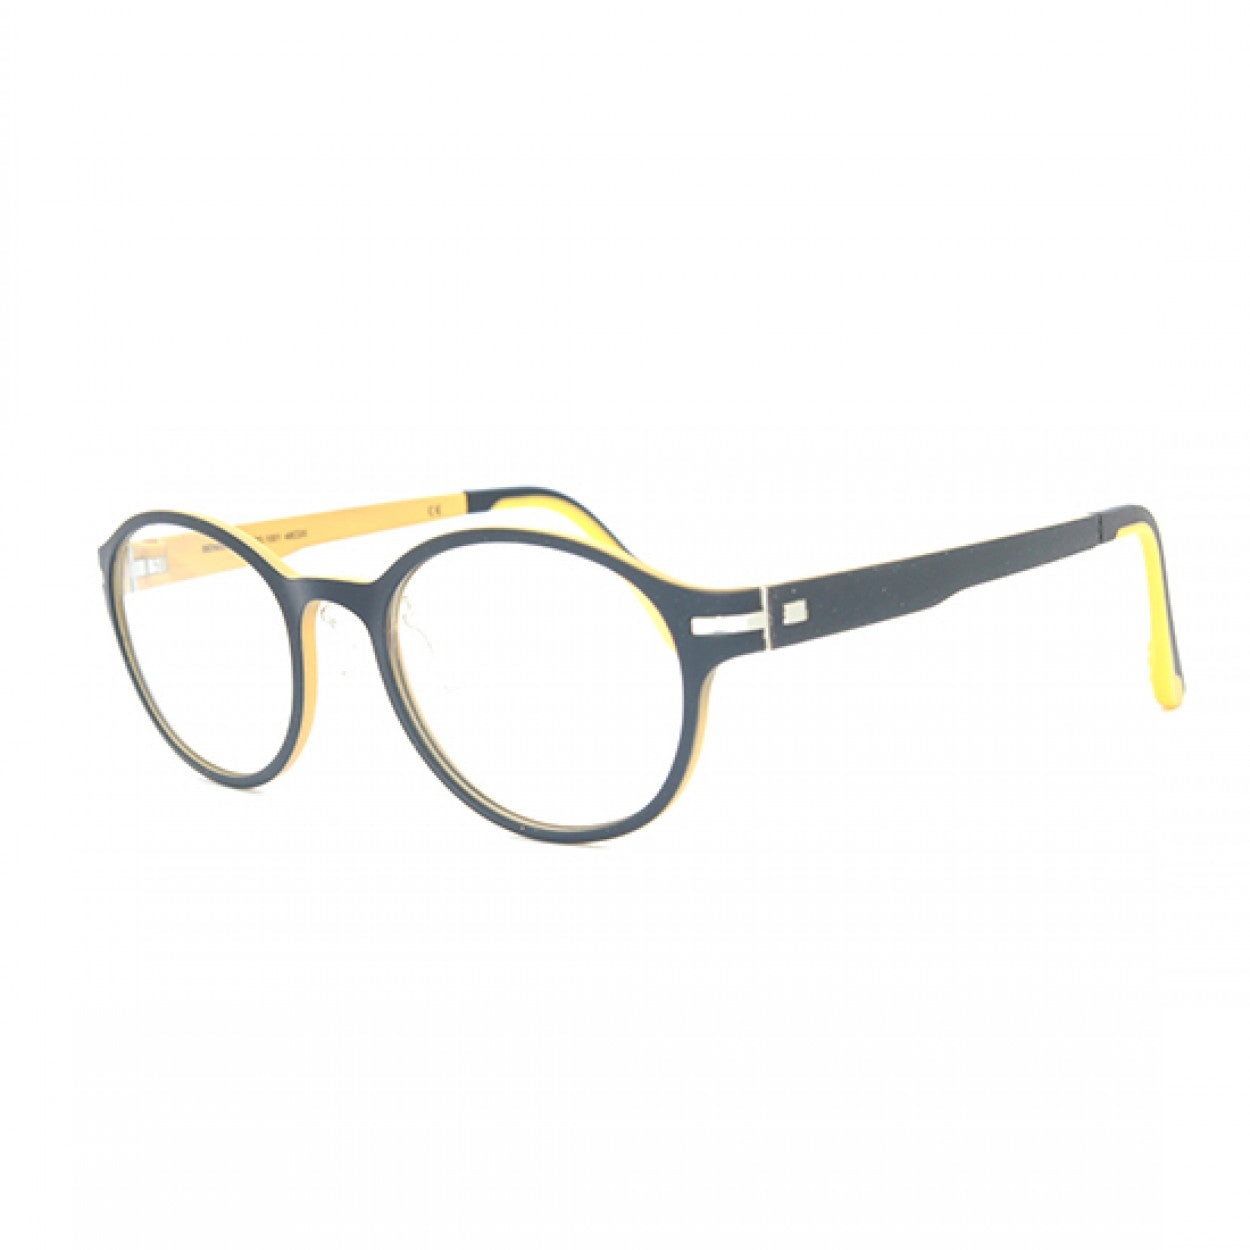 Injection Eyeglass Frames - Mod.1001-0202